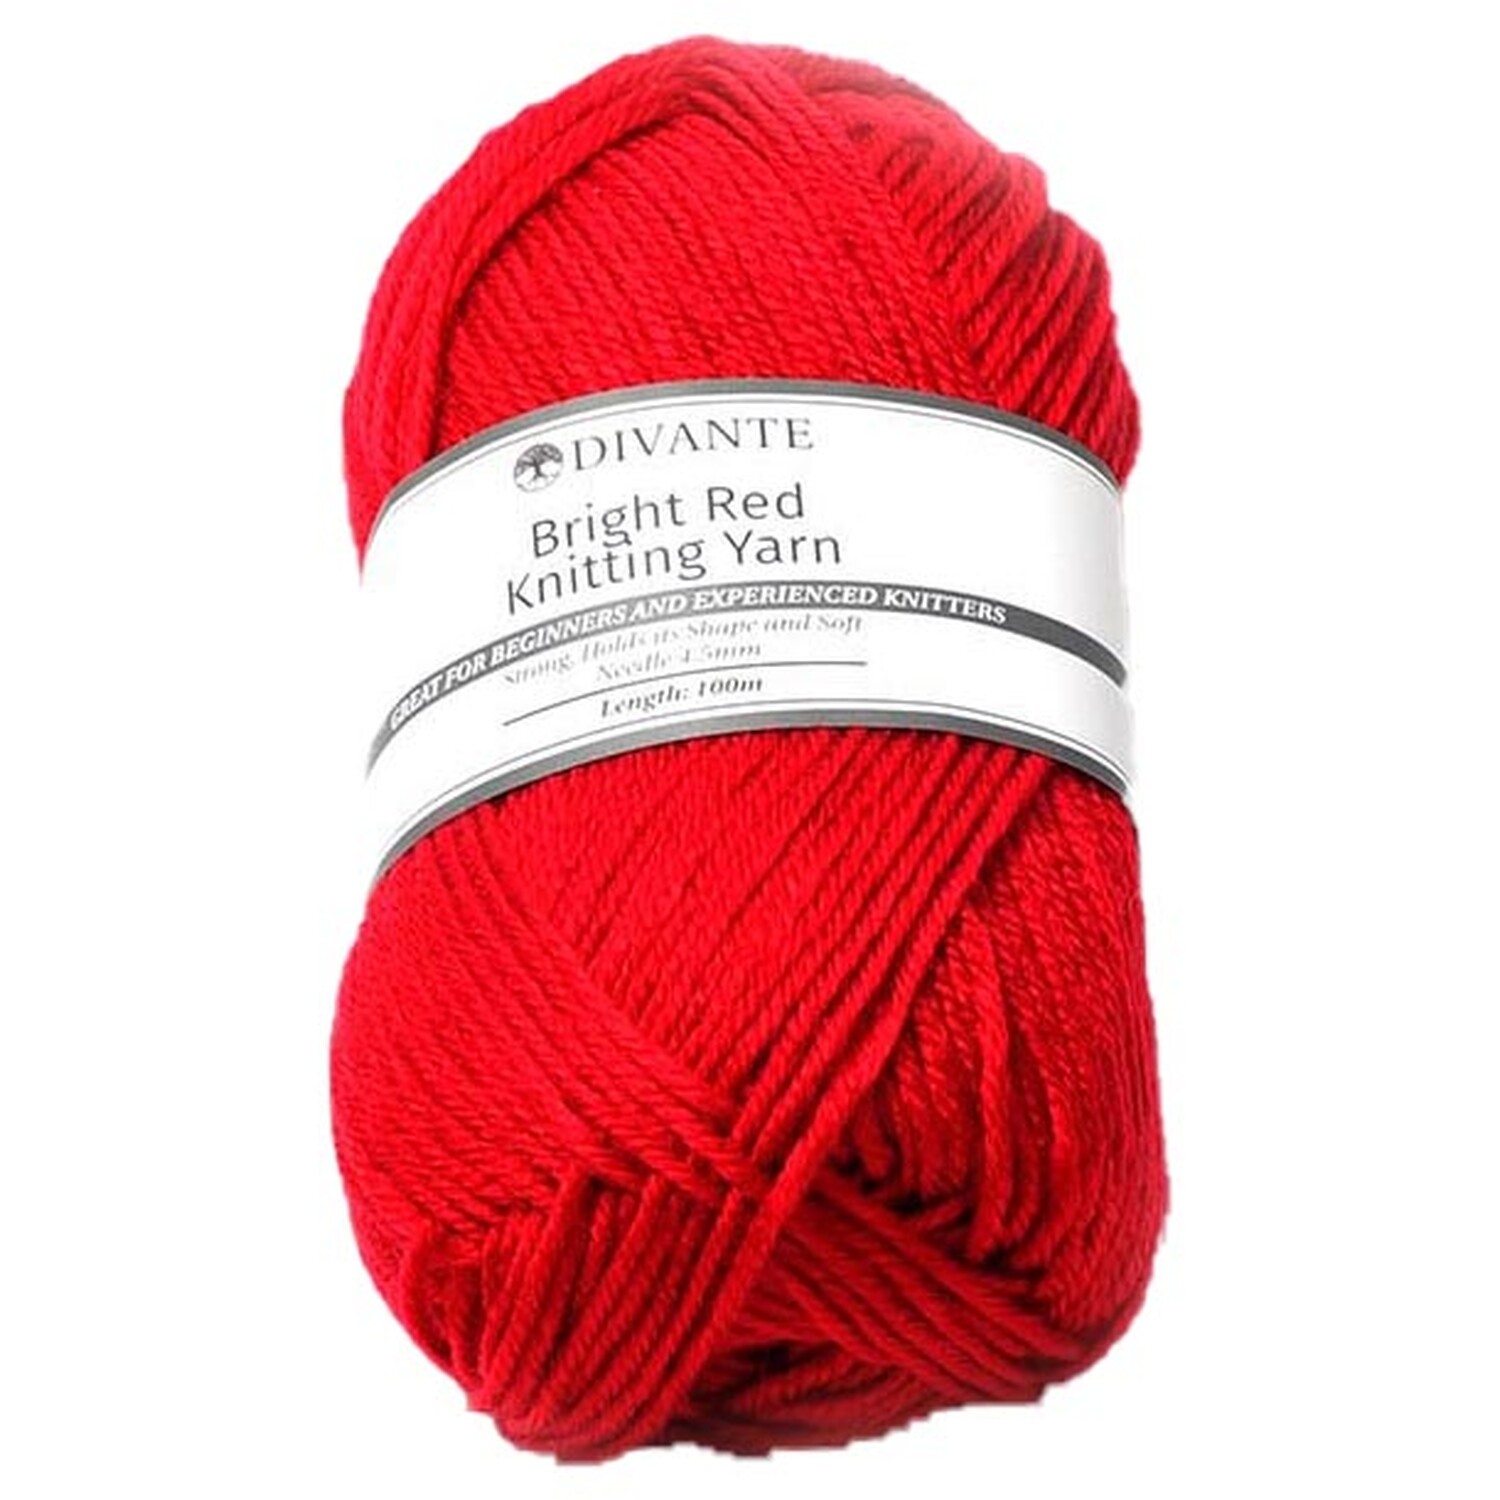 Divante Value Knitting Yarn - Bright Red Image